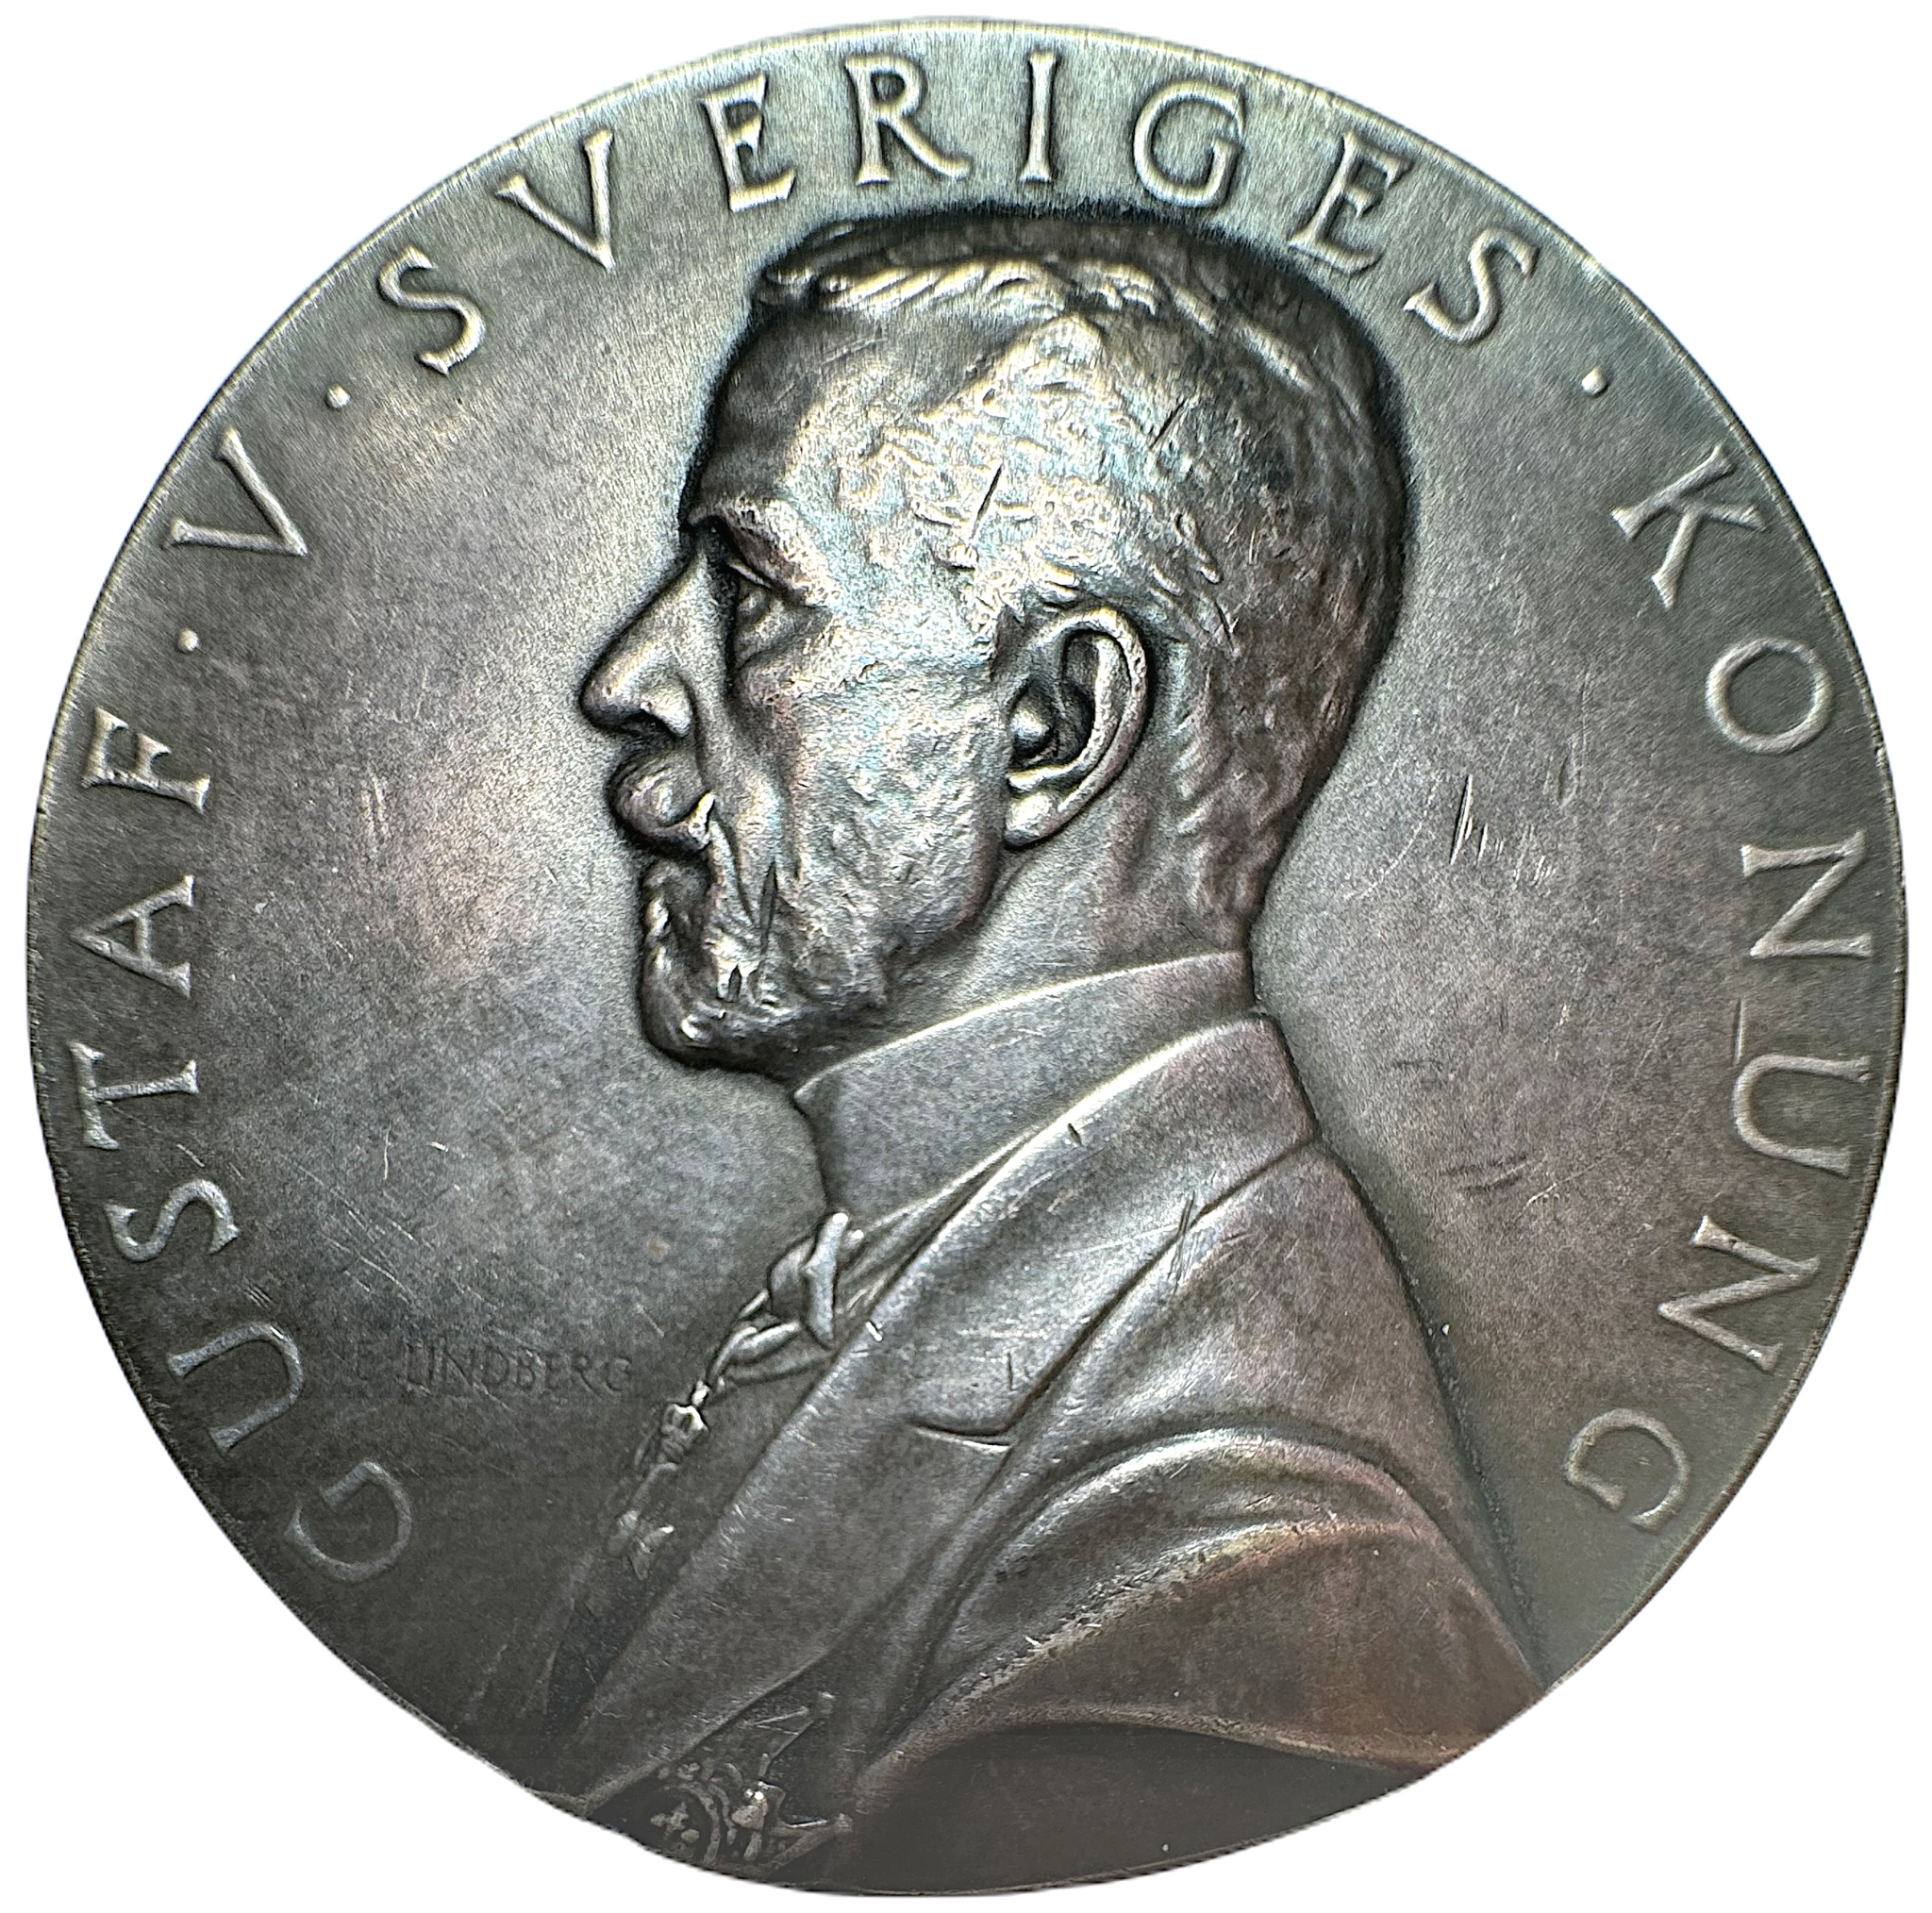 Gustav V - Lantbruksmötets i Örebro 1911 av Erik Lindberg - Stora prismedaljen i silver